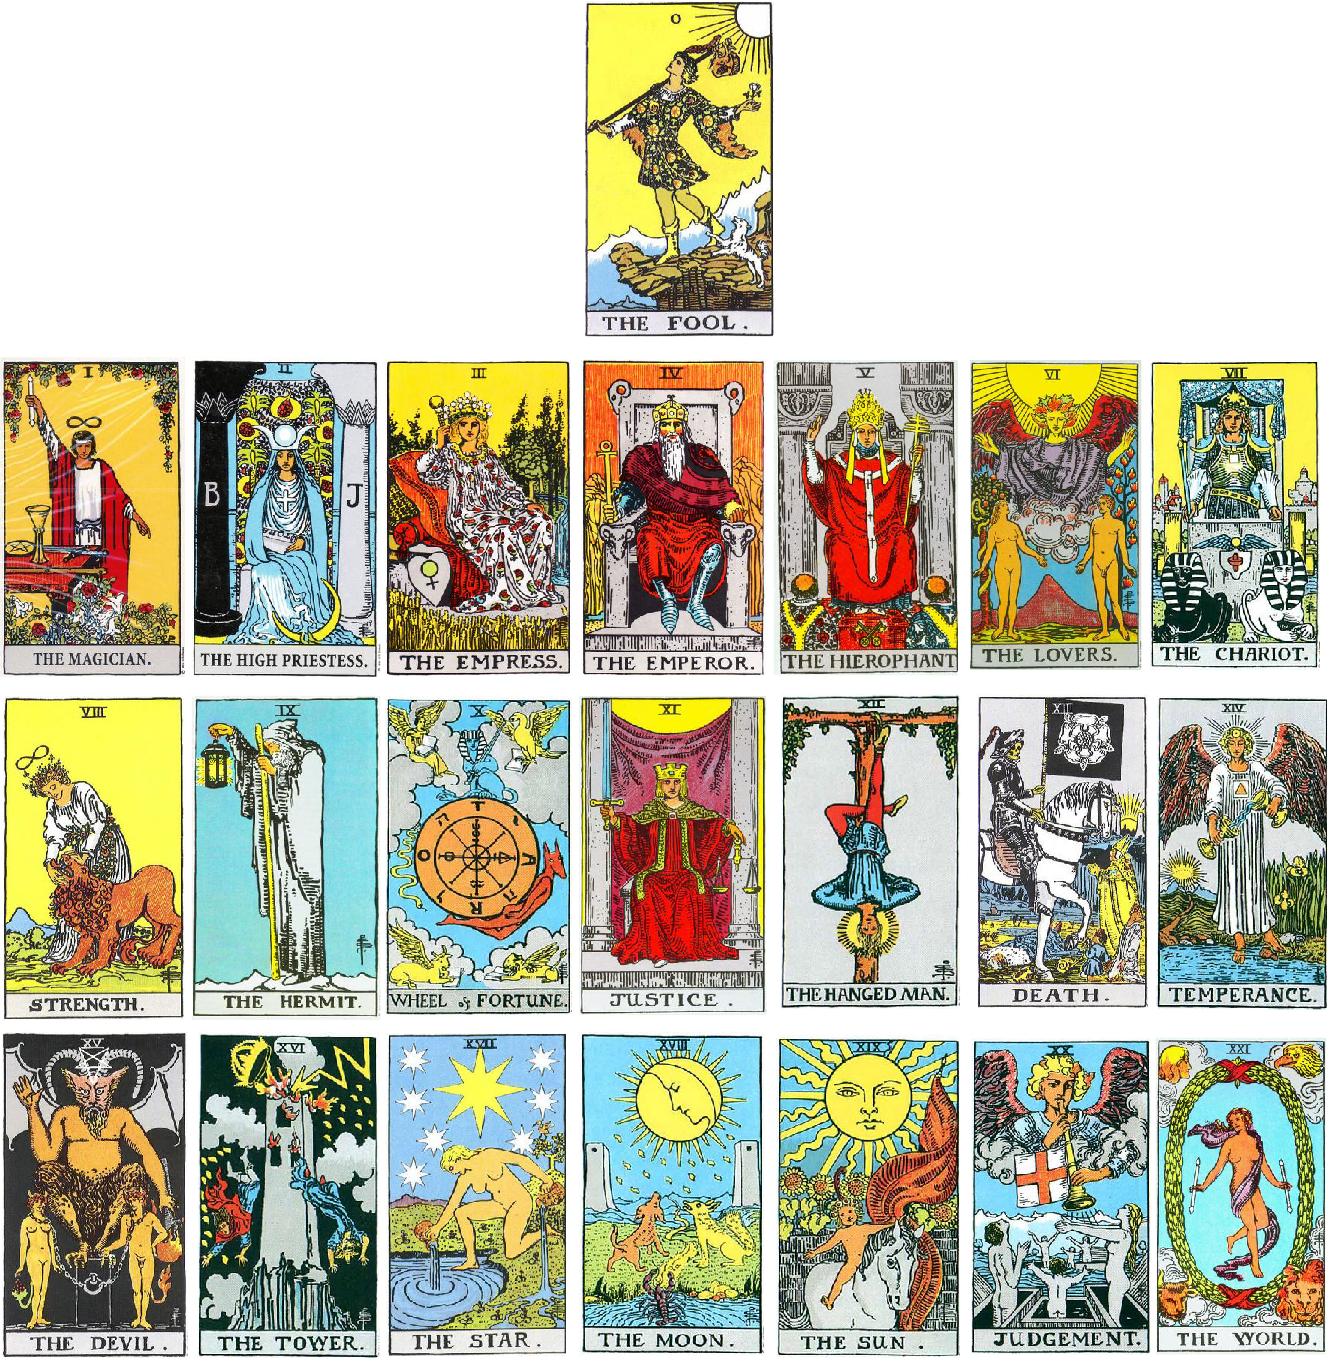 World Tarot Card Meanings